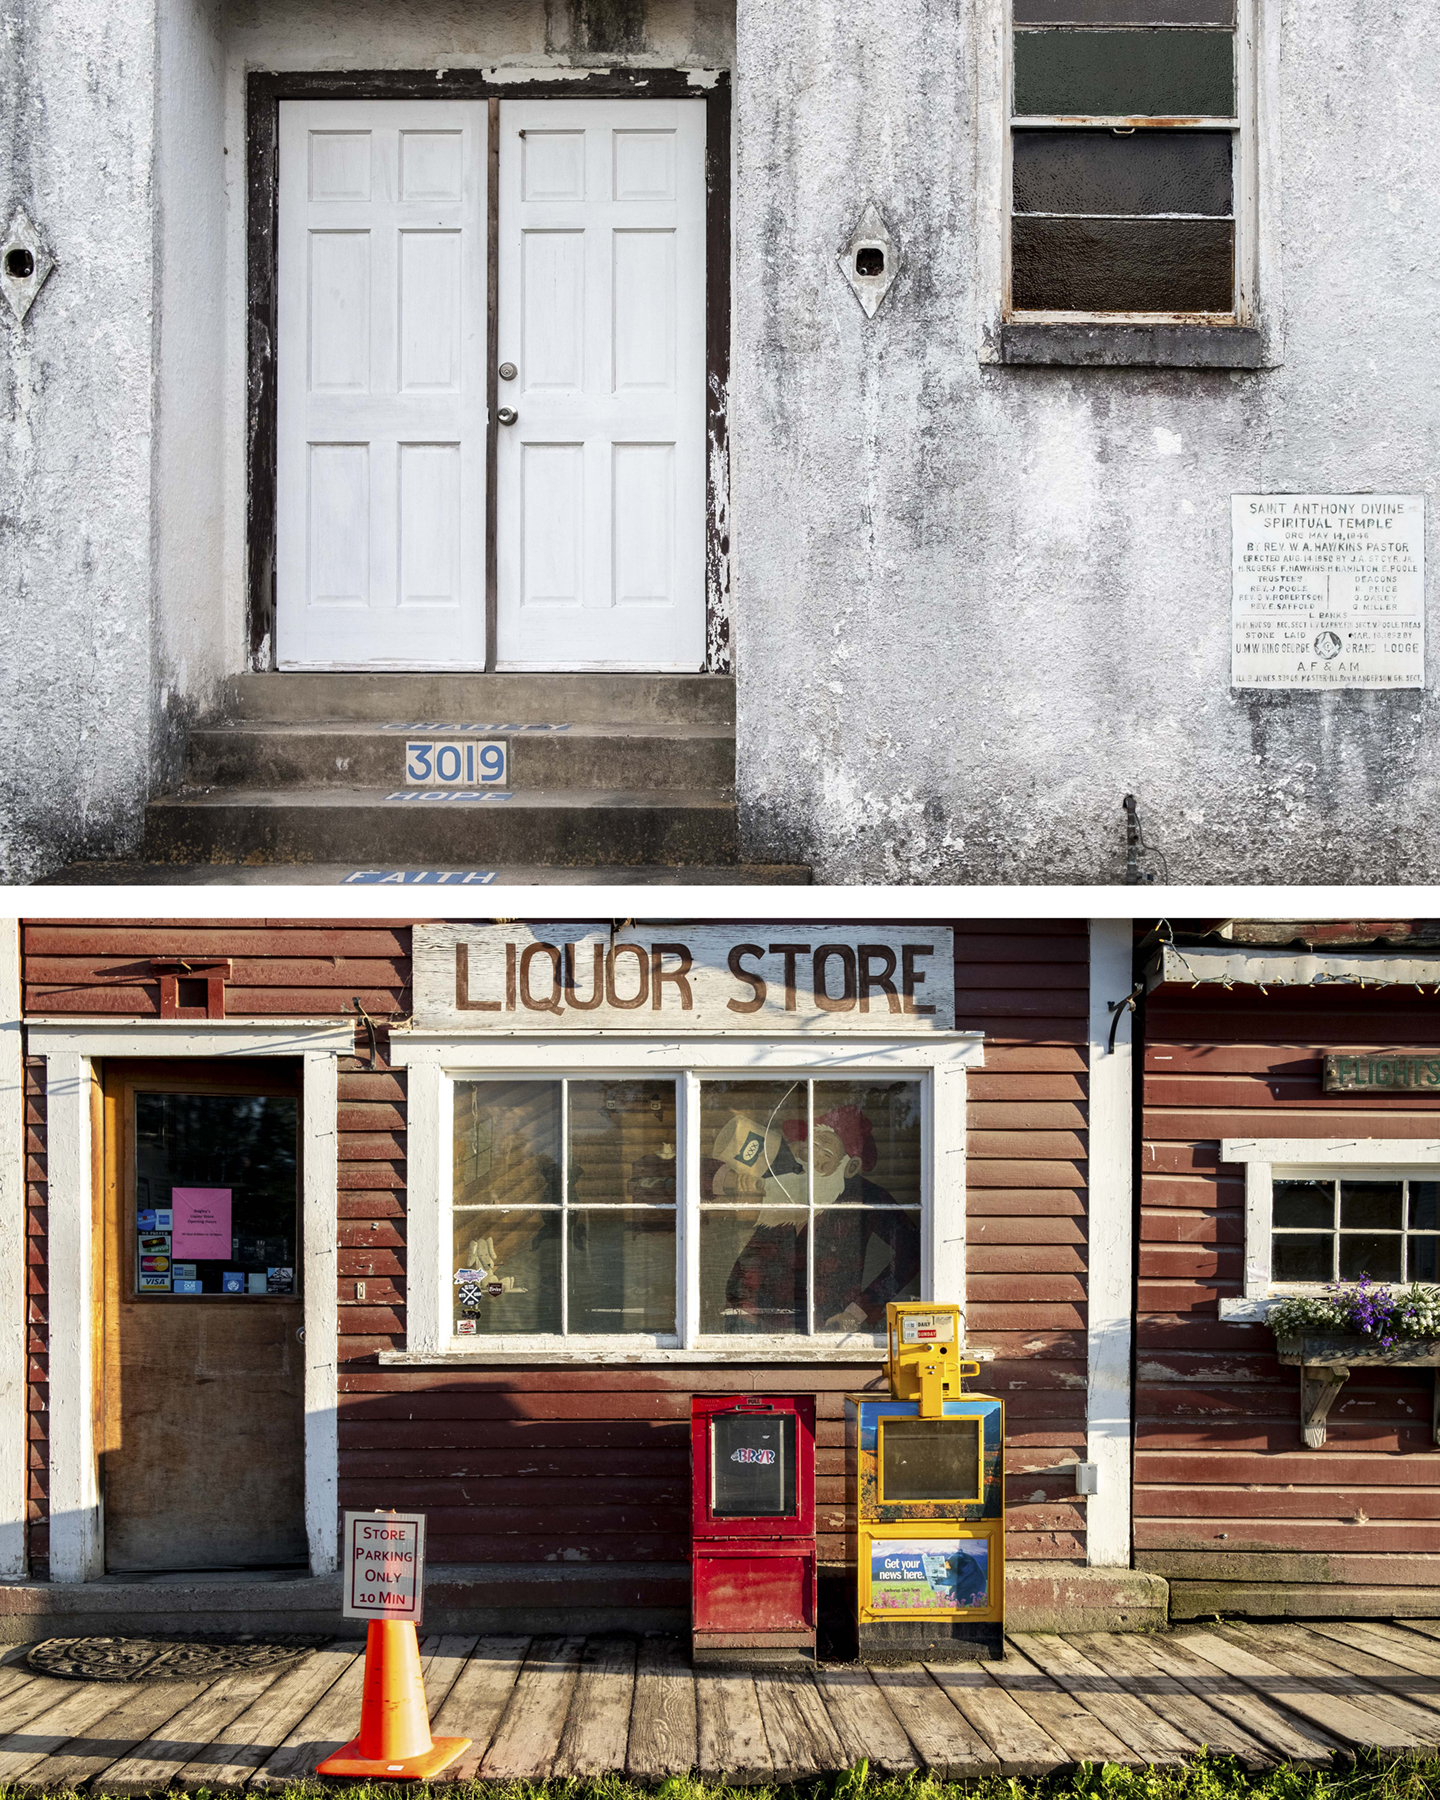 Storefront in Louisiana versus Alaska, courtesy of the artist